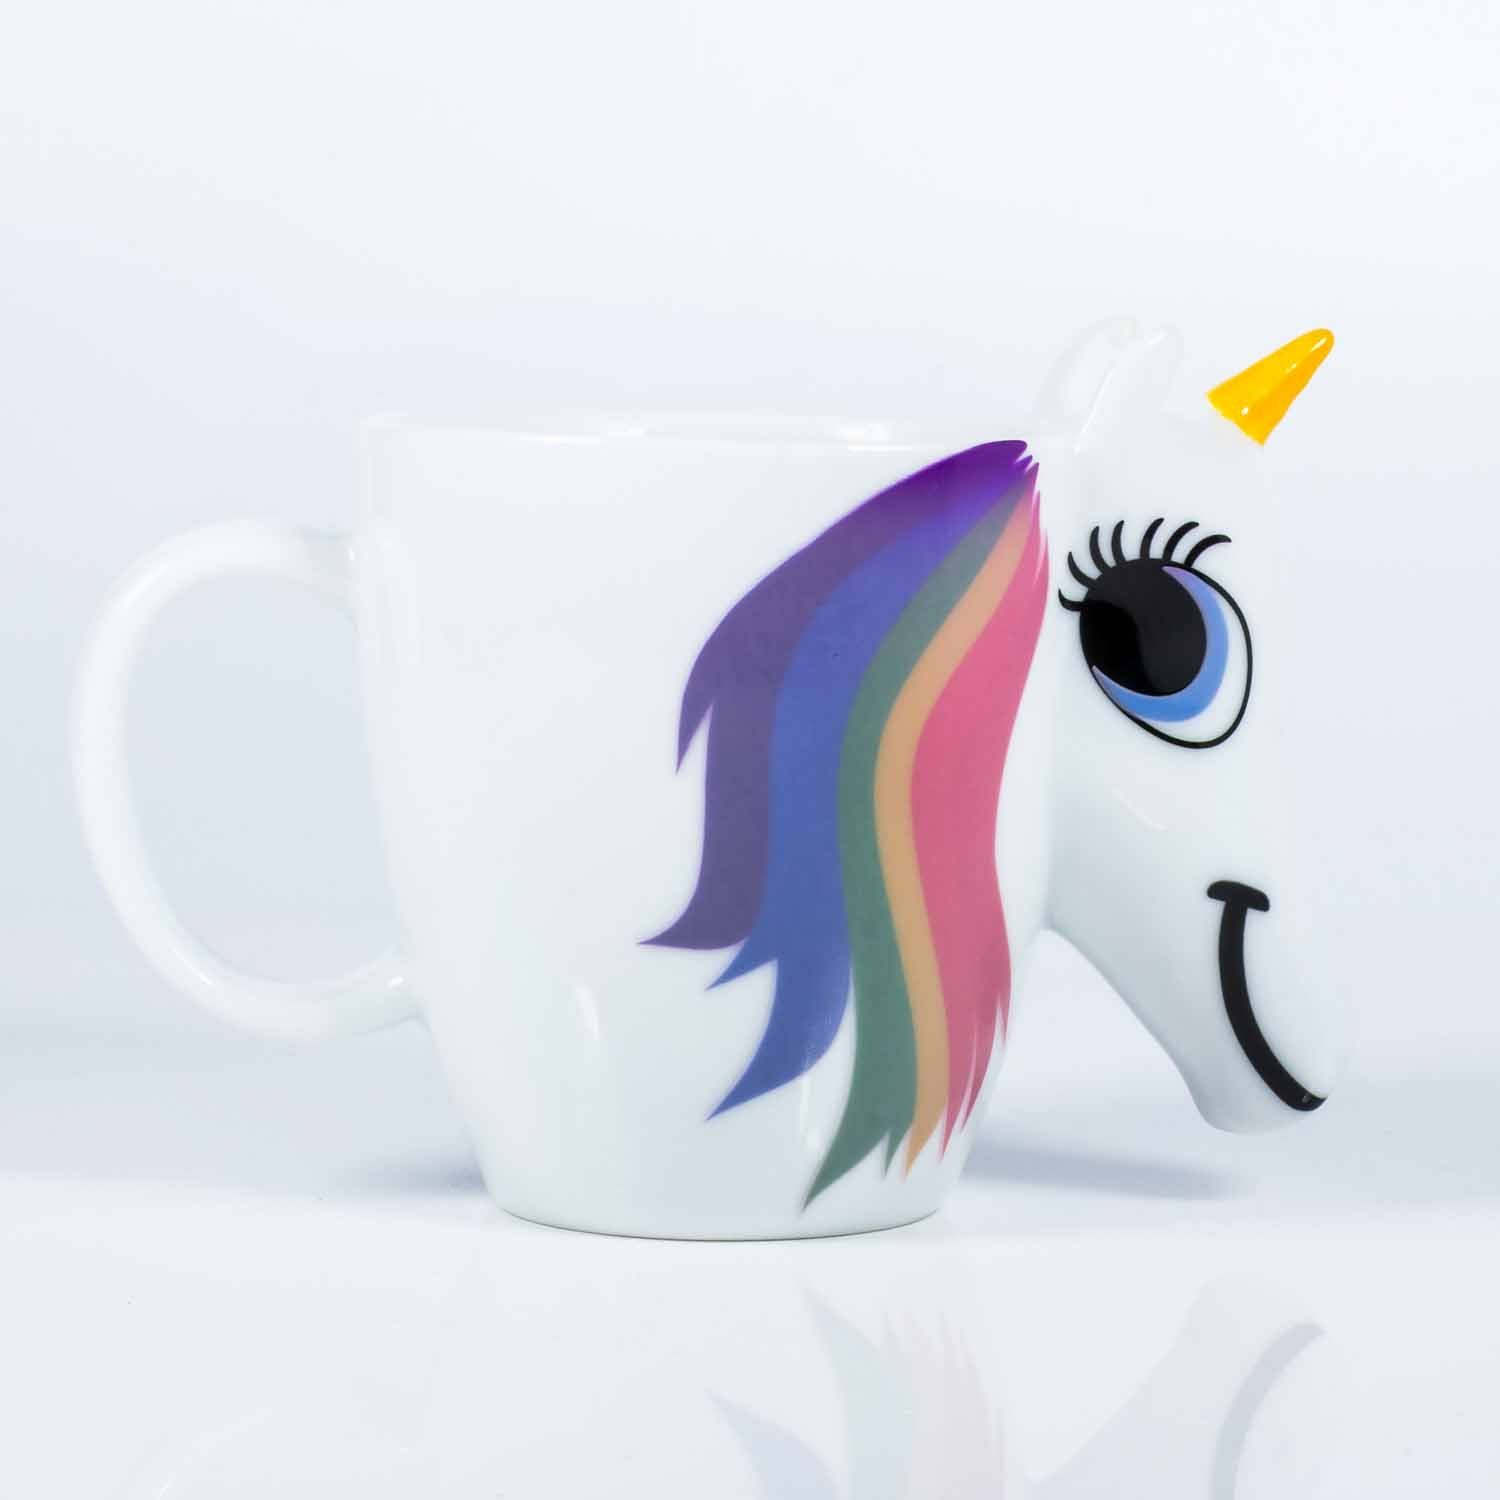 Thumbs Up Tasse Tasse "Unicorn Einhorn Tasse mit Farbwechsel, Keramik, - Mug" Farbwechseleffekt